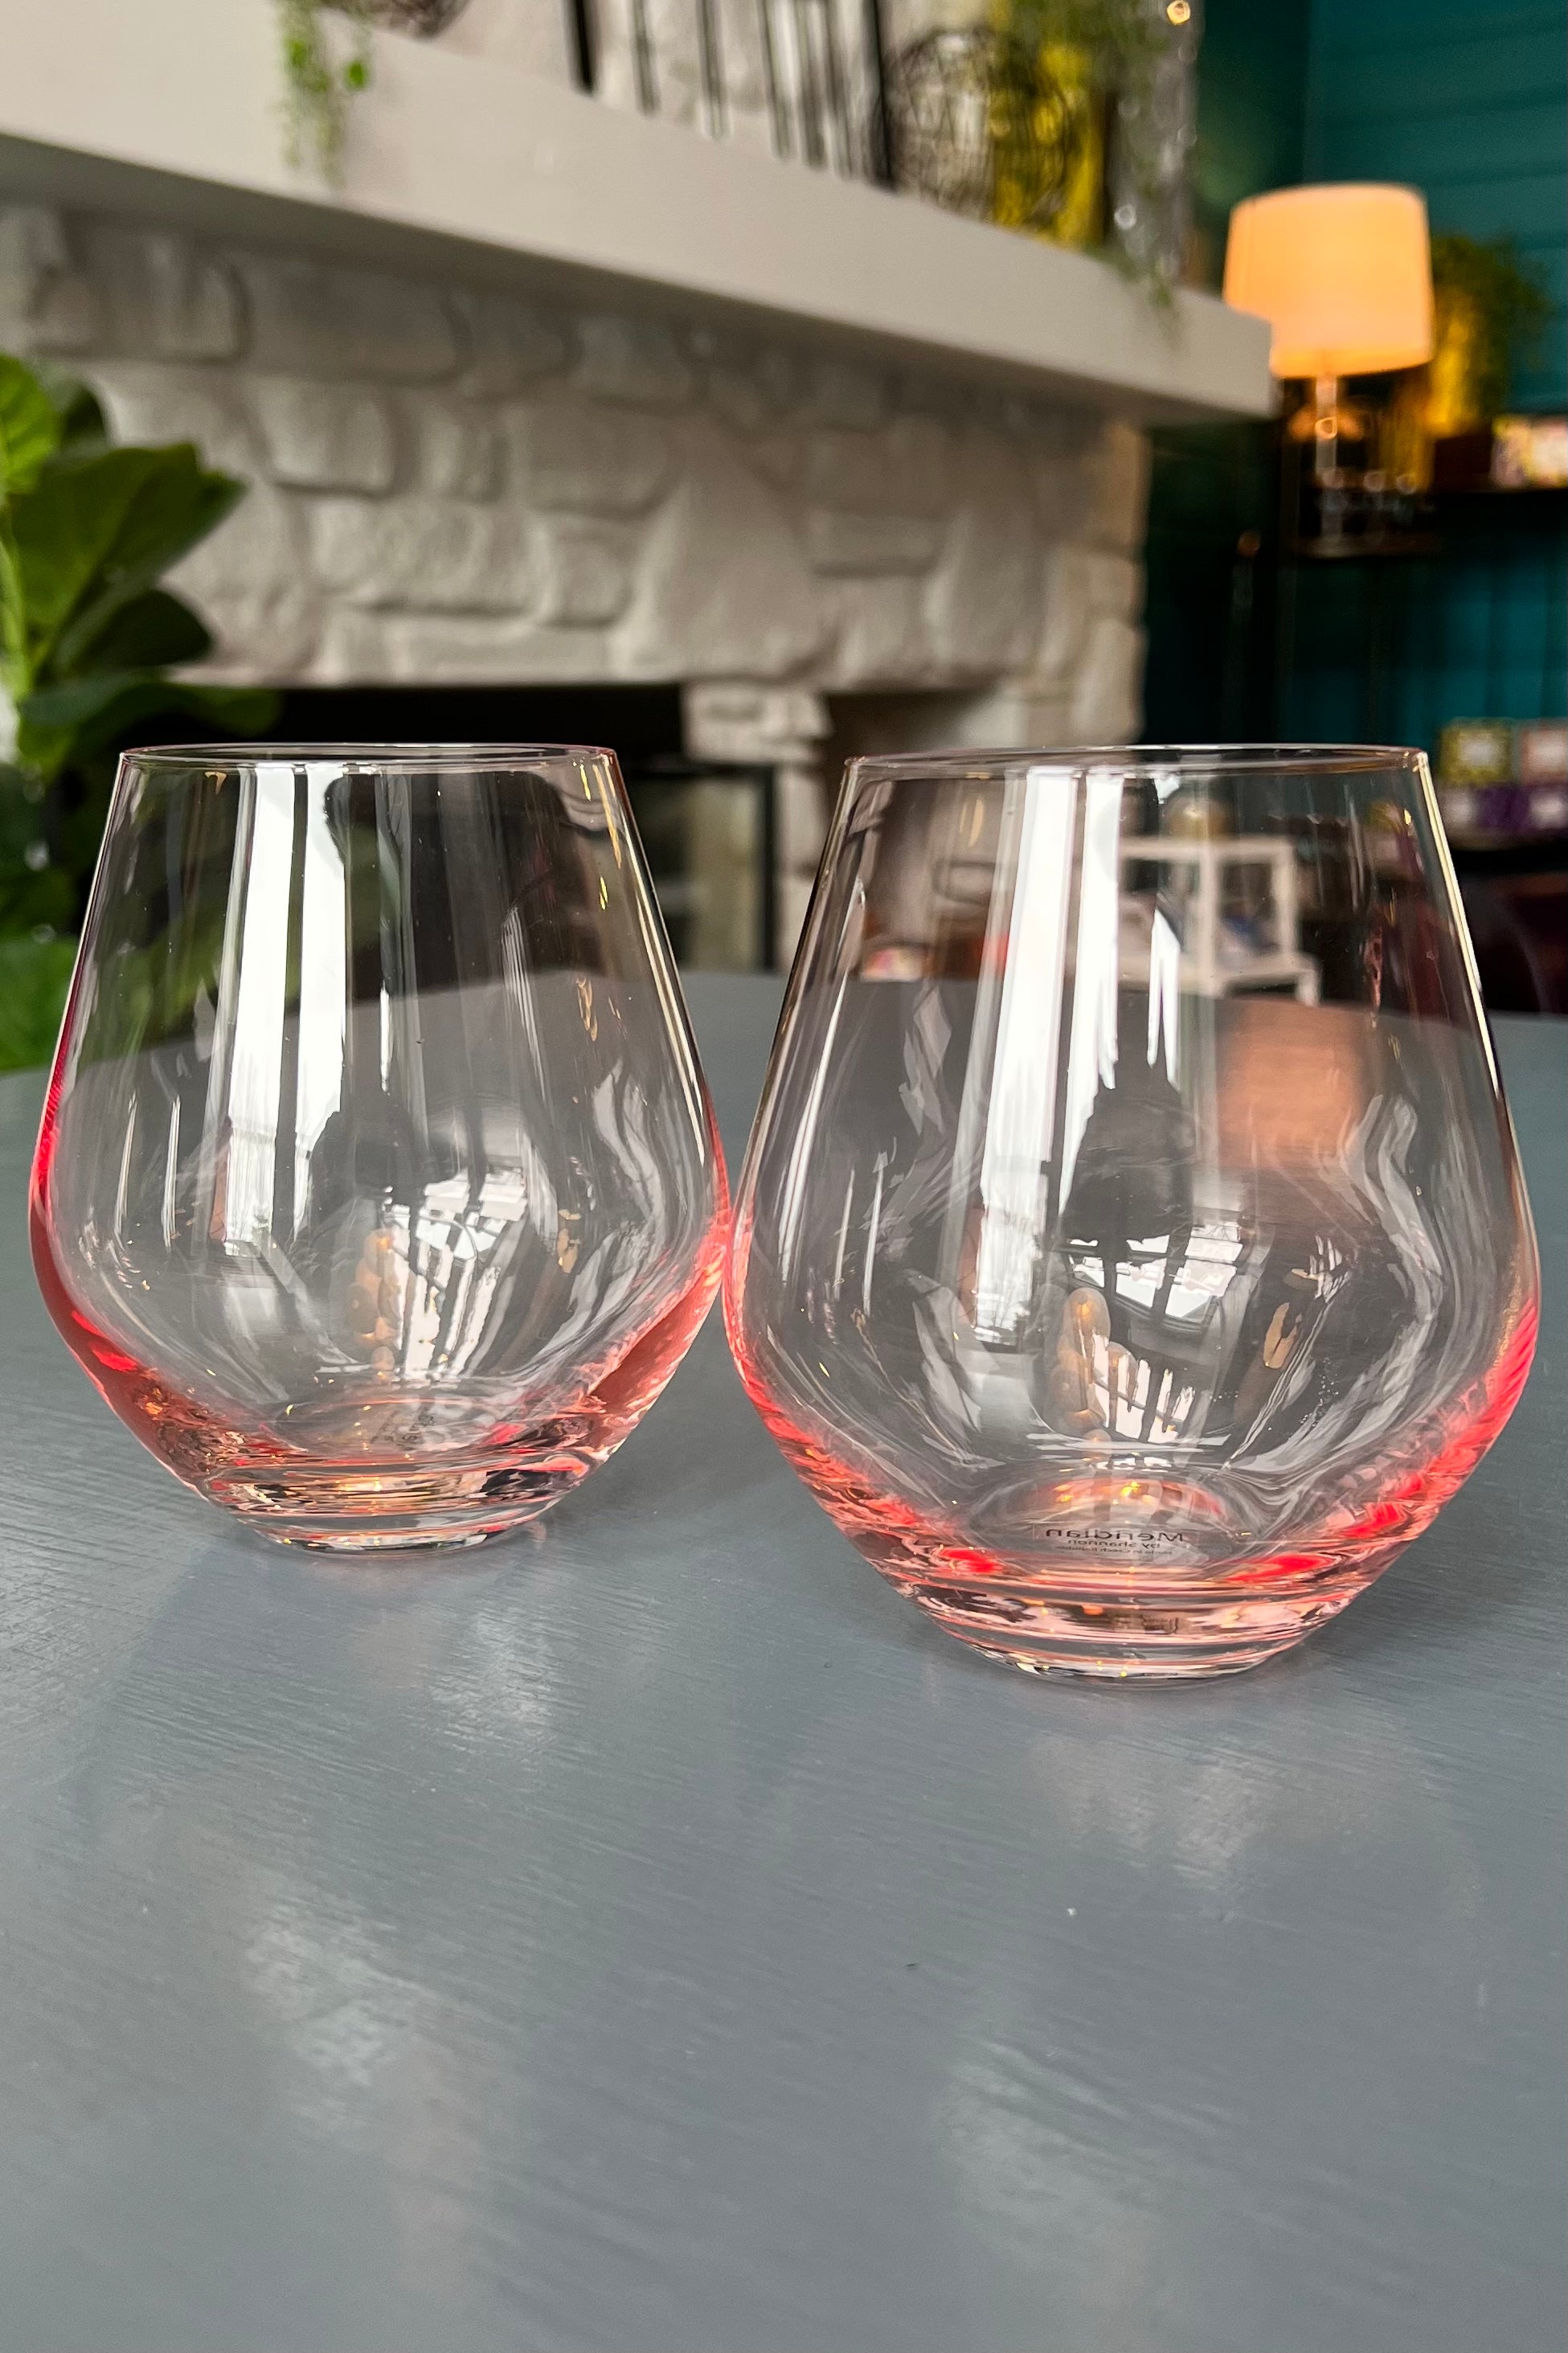 Godinger Set of 4 Wine Glass Clear